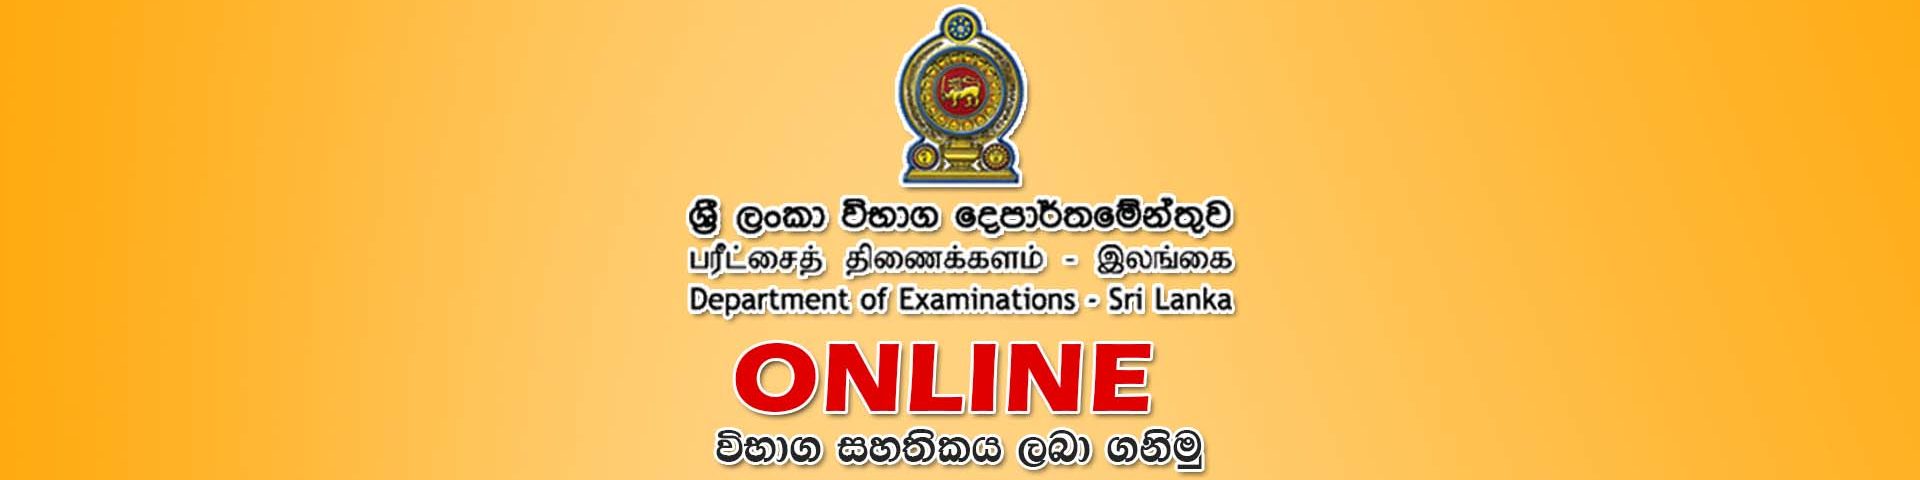 Examination Certificate online, Request & Verify Results Online